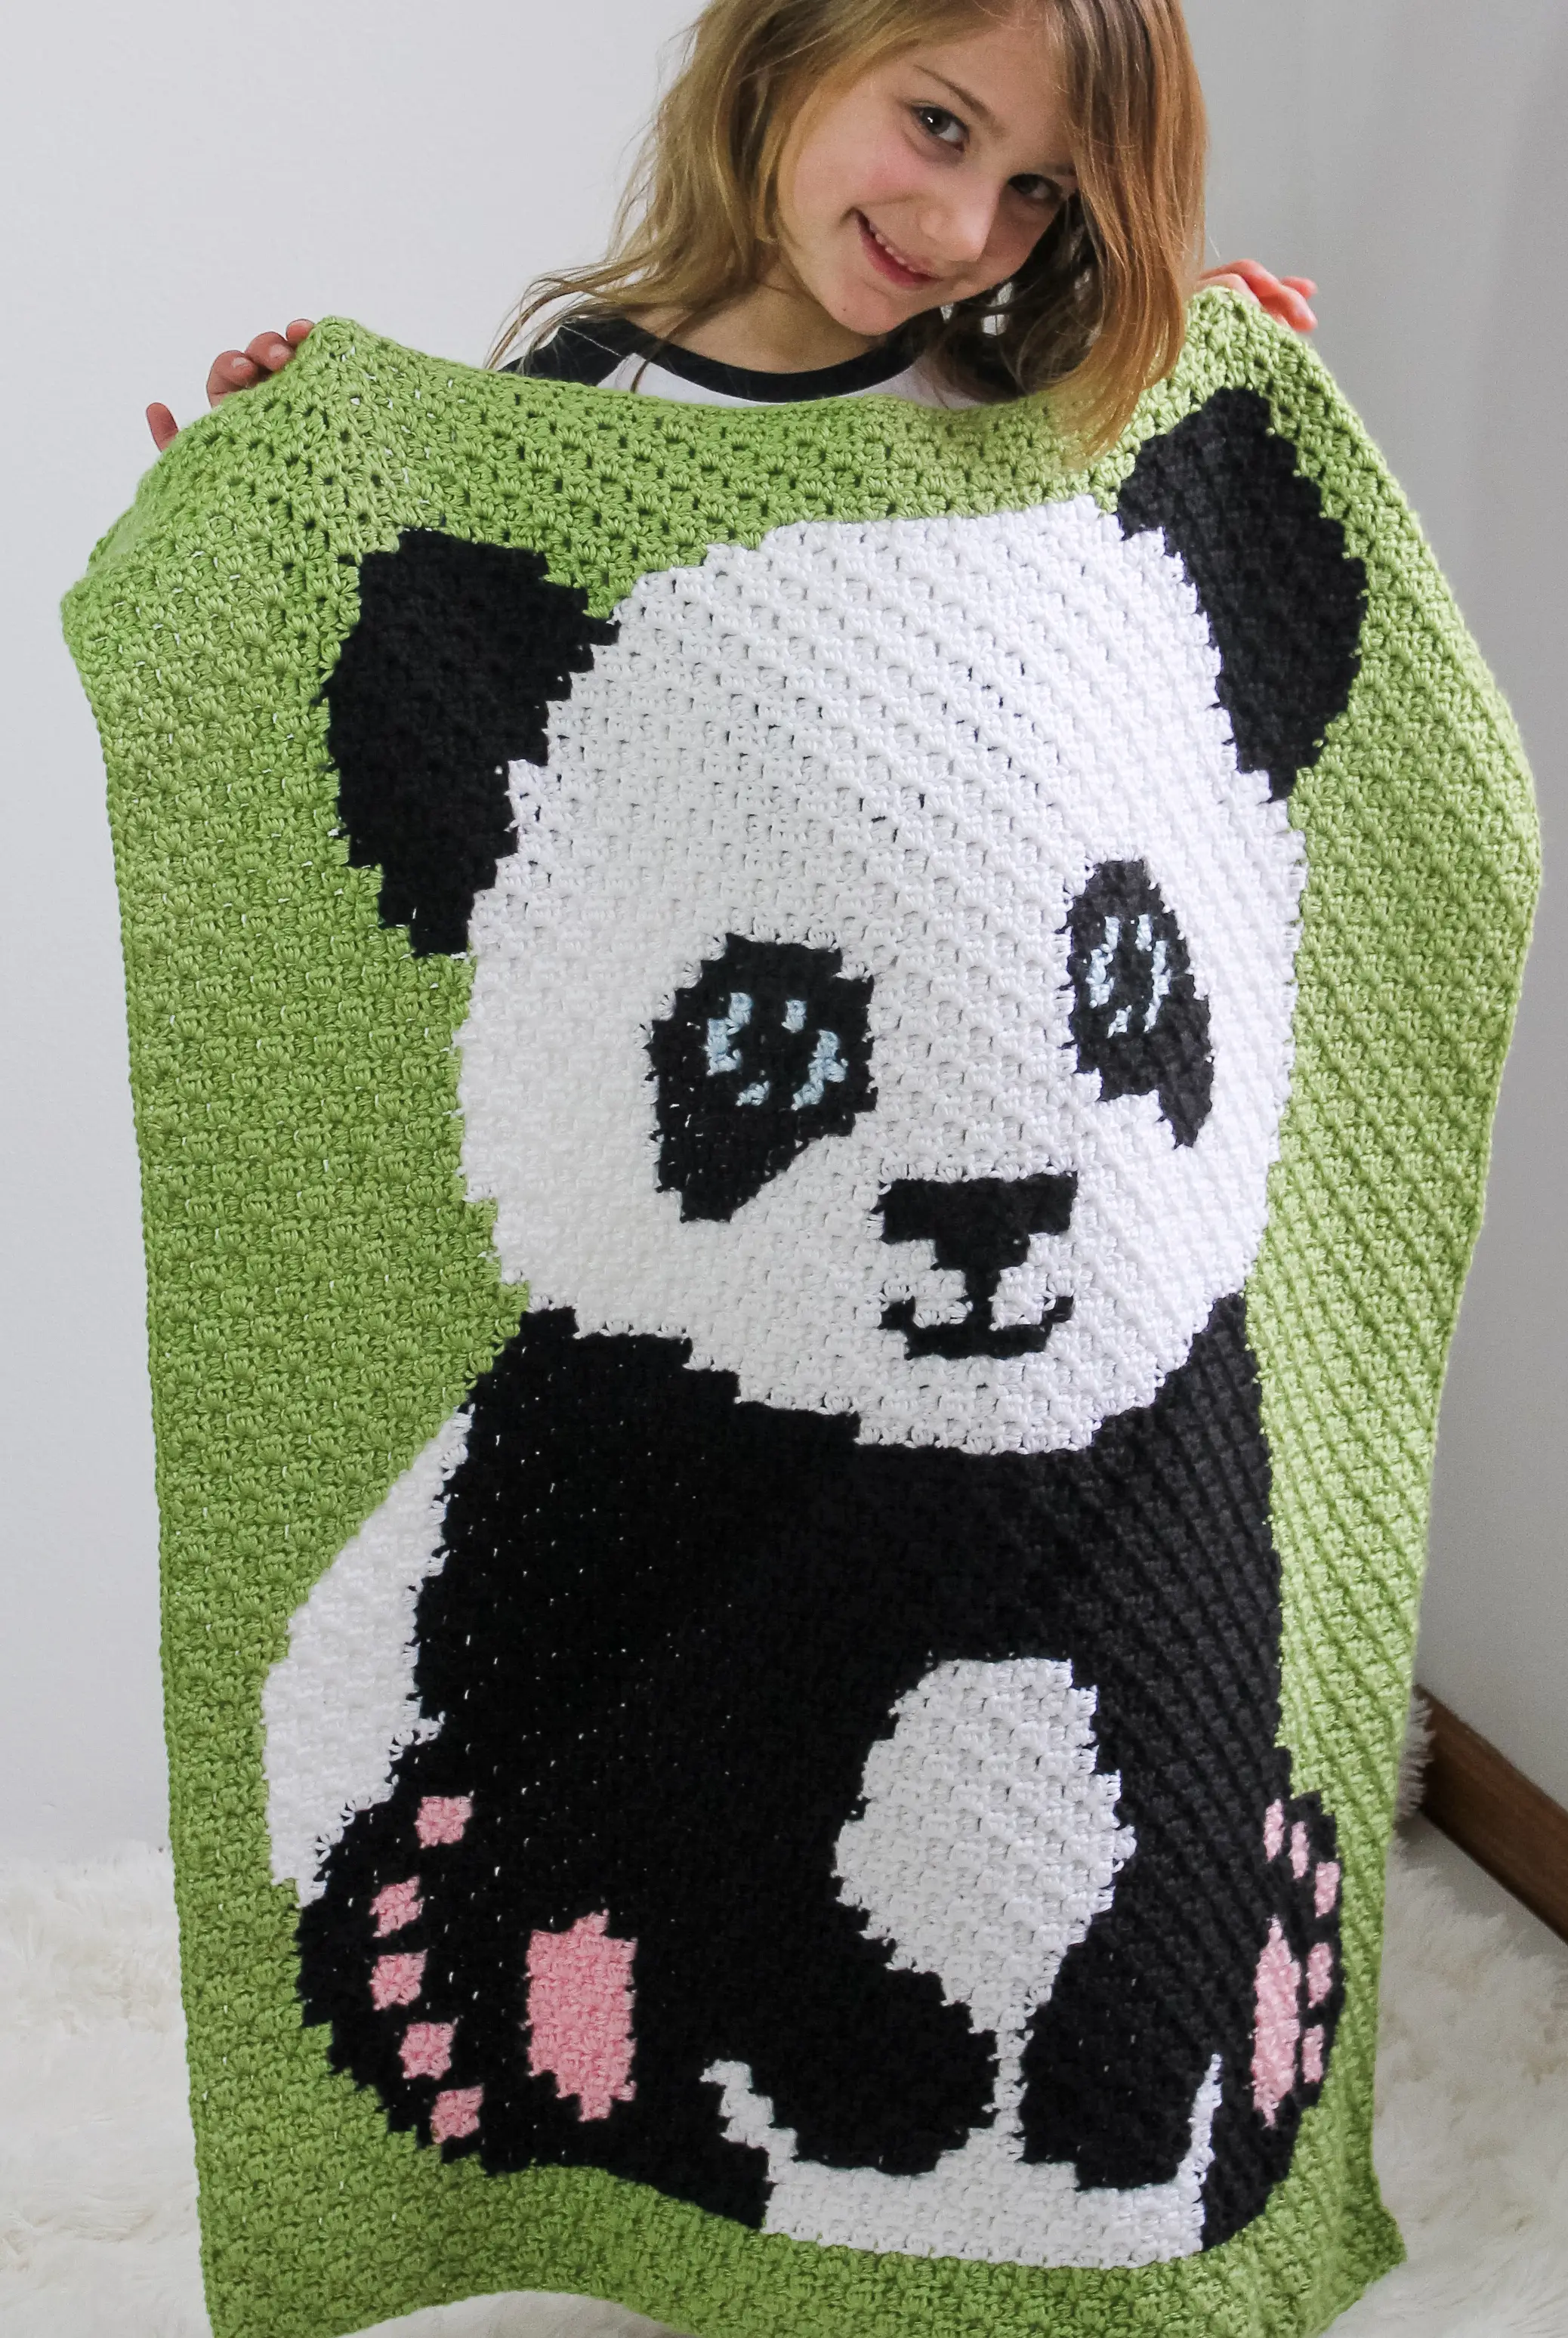 Panda C2C Crochet Blanket free pattern